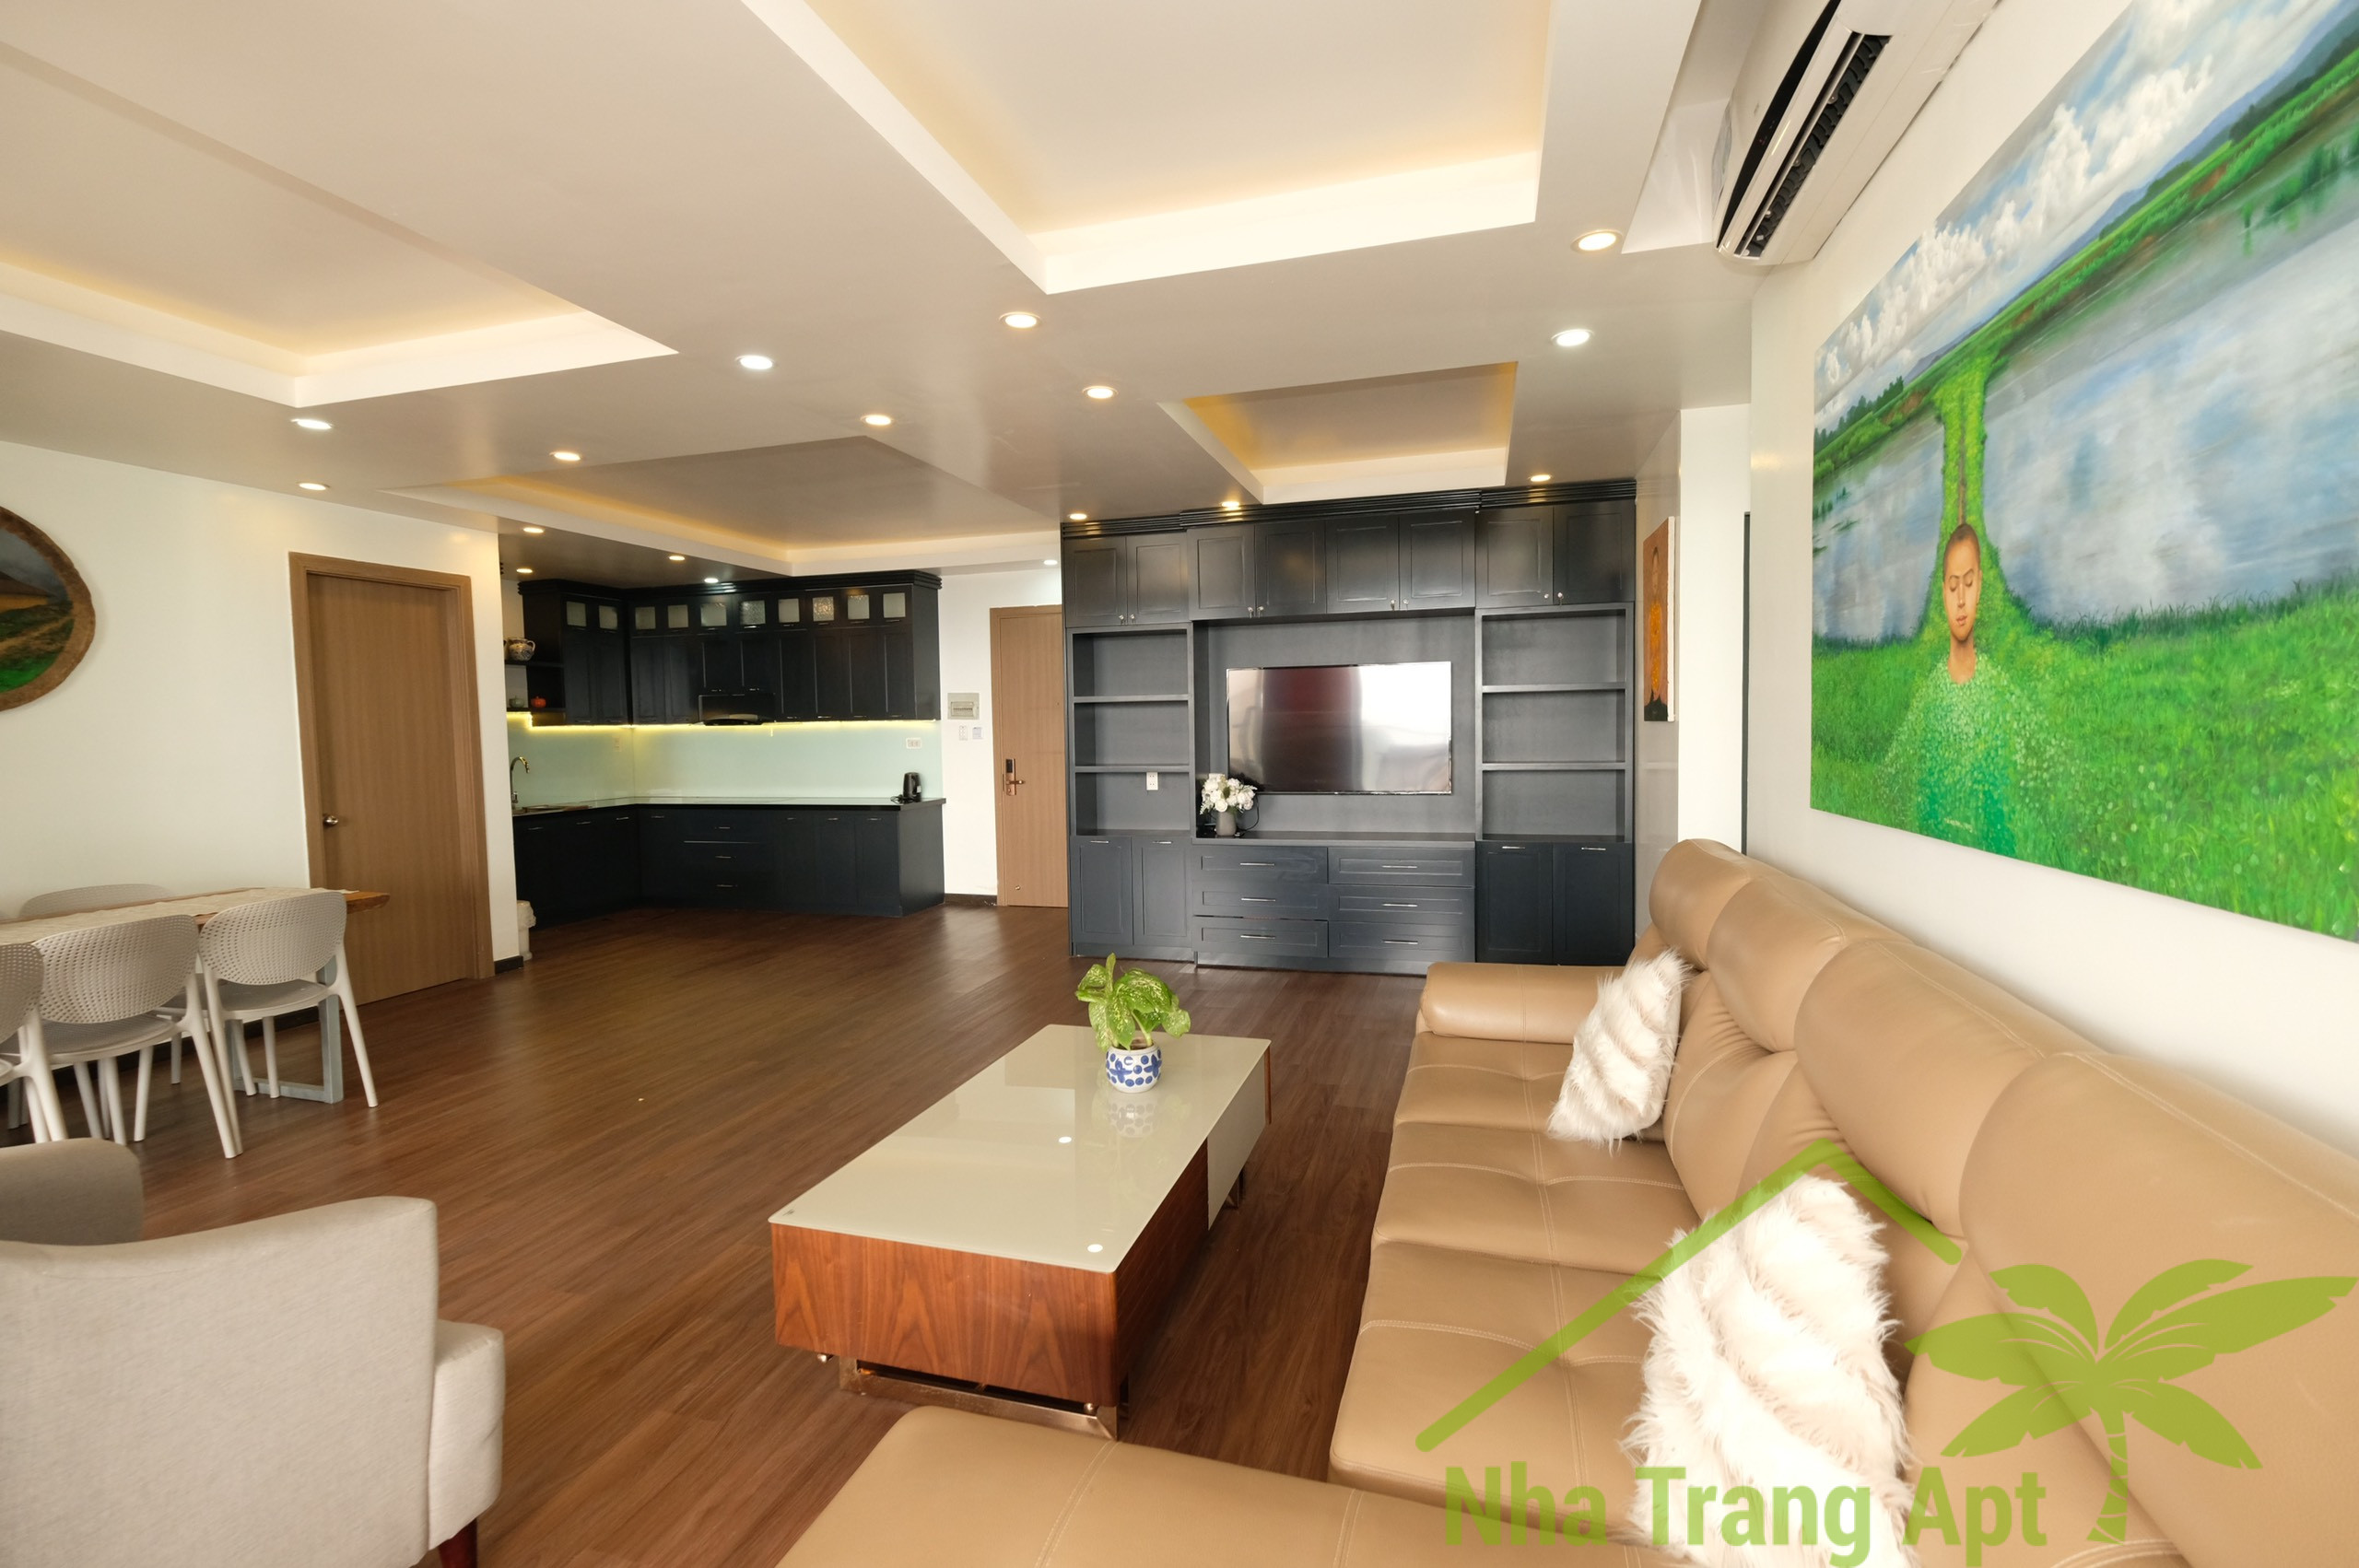 3 bedroom Penhouse APT for rent in Muong Thanh Oceanus A909